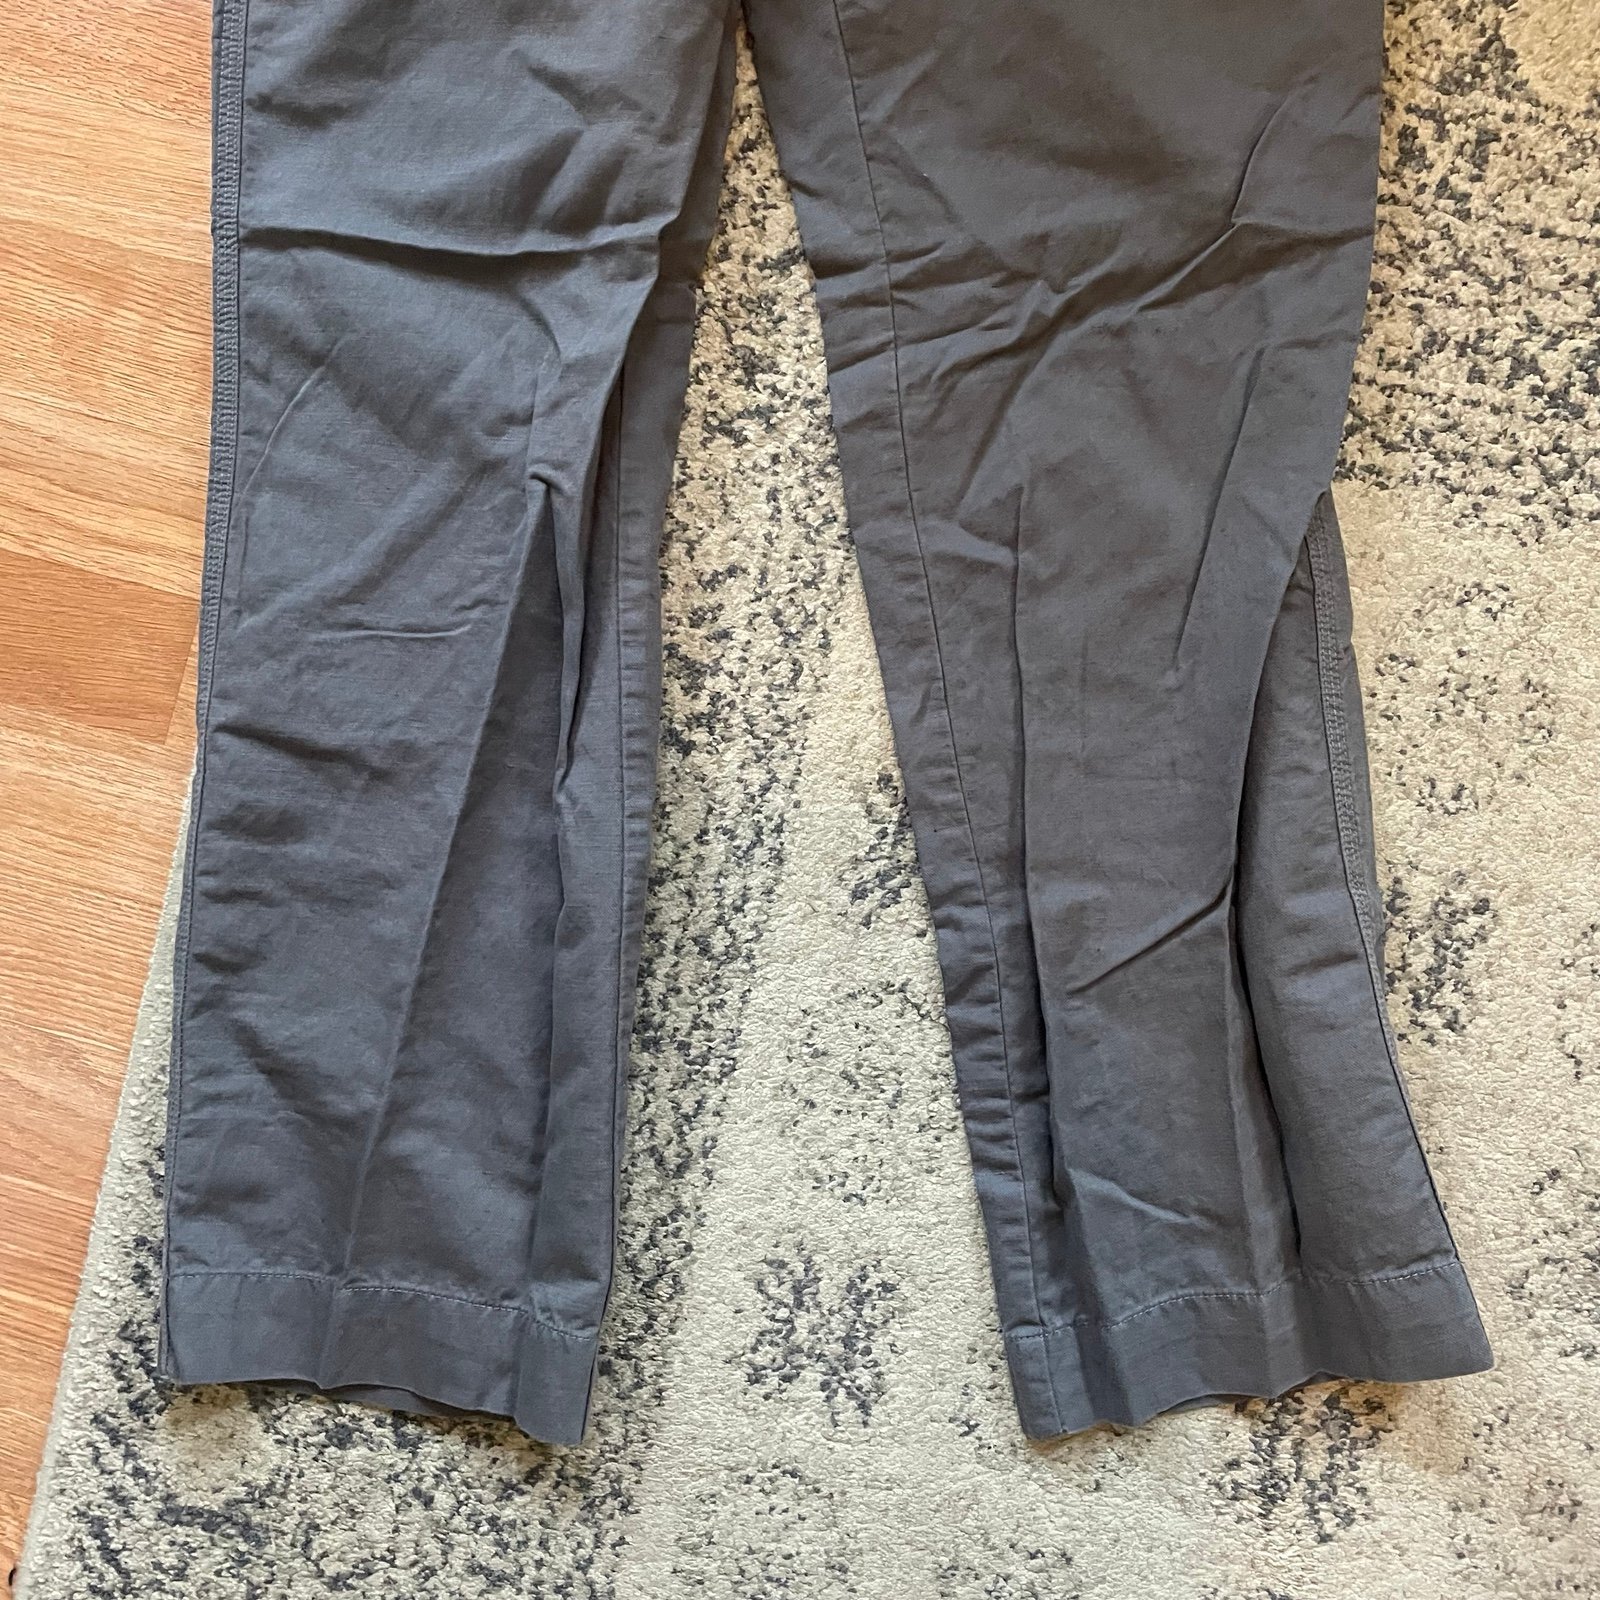 Buy J.crew Size 4 Gray Pants NNbtkVgf0 US Outlet